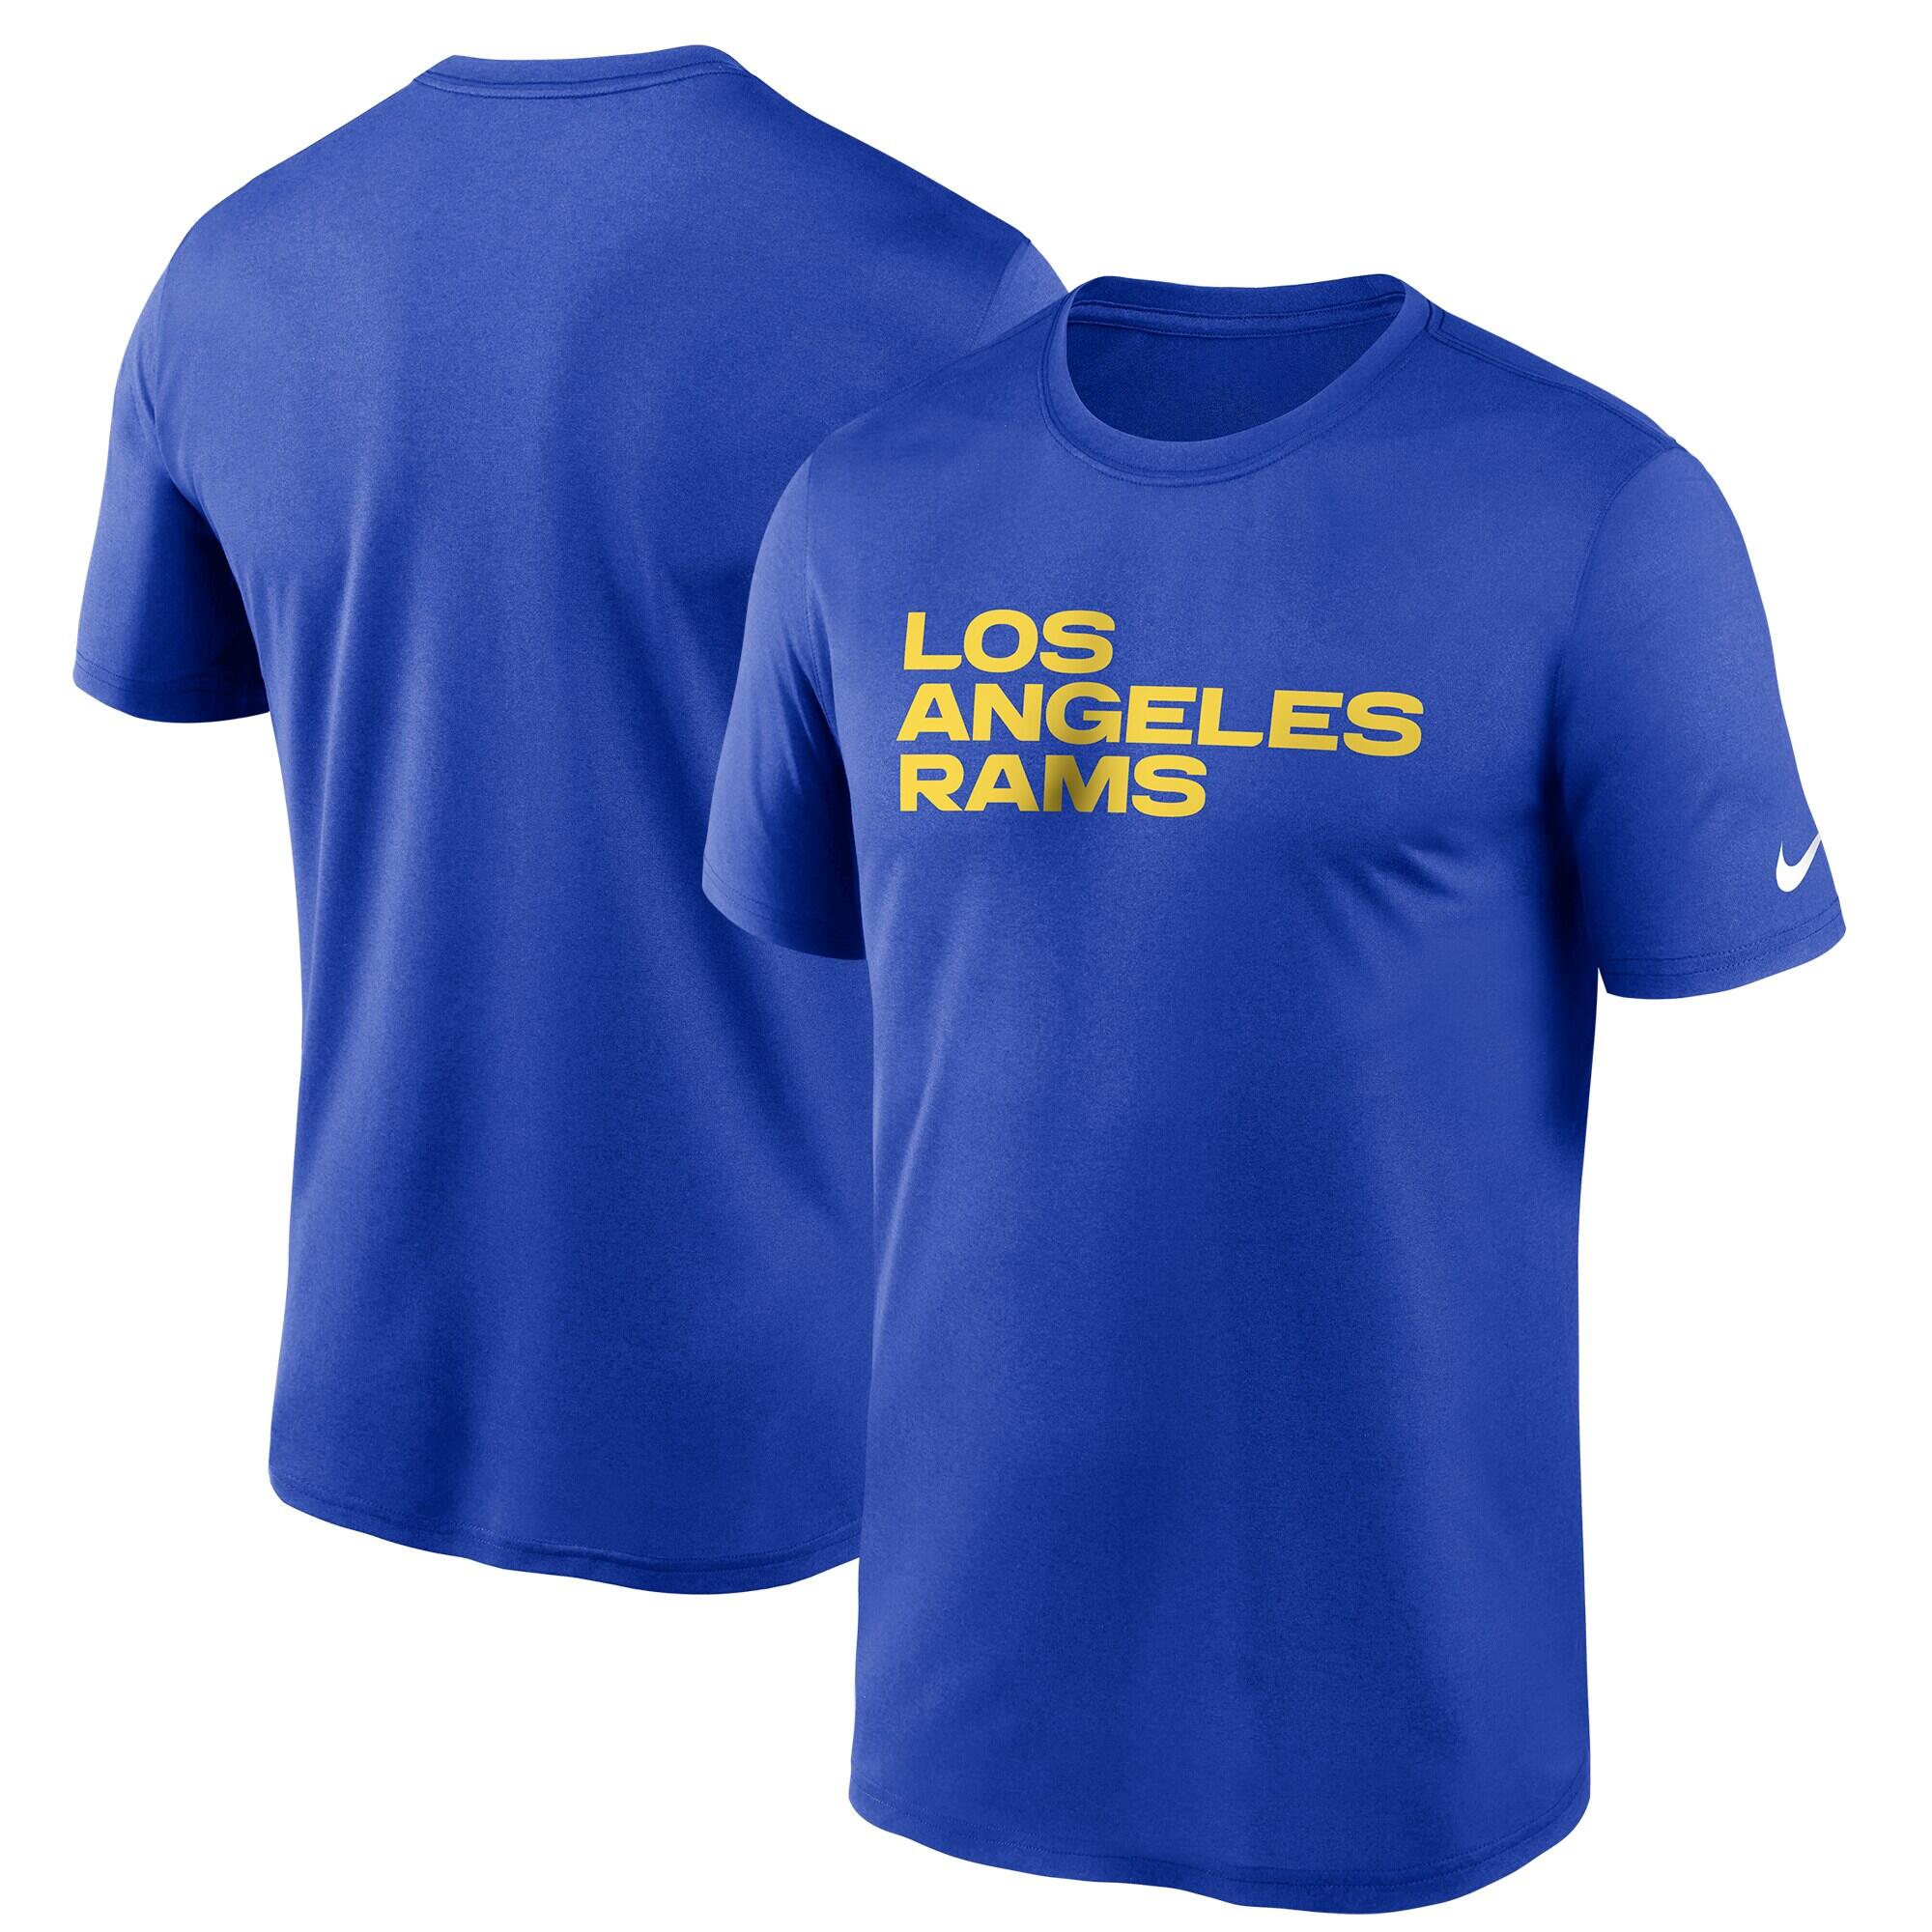 Men's Los Angeles Rams Blue T-Shirt